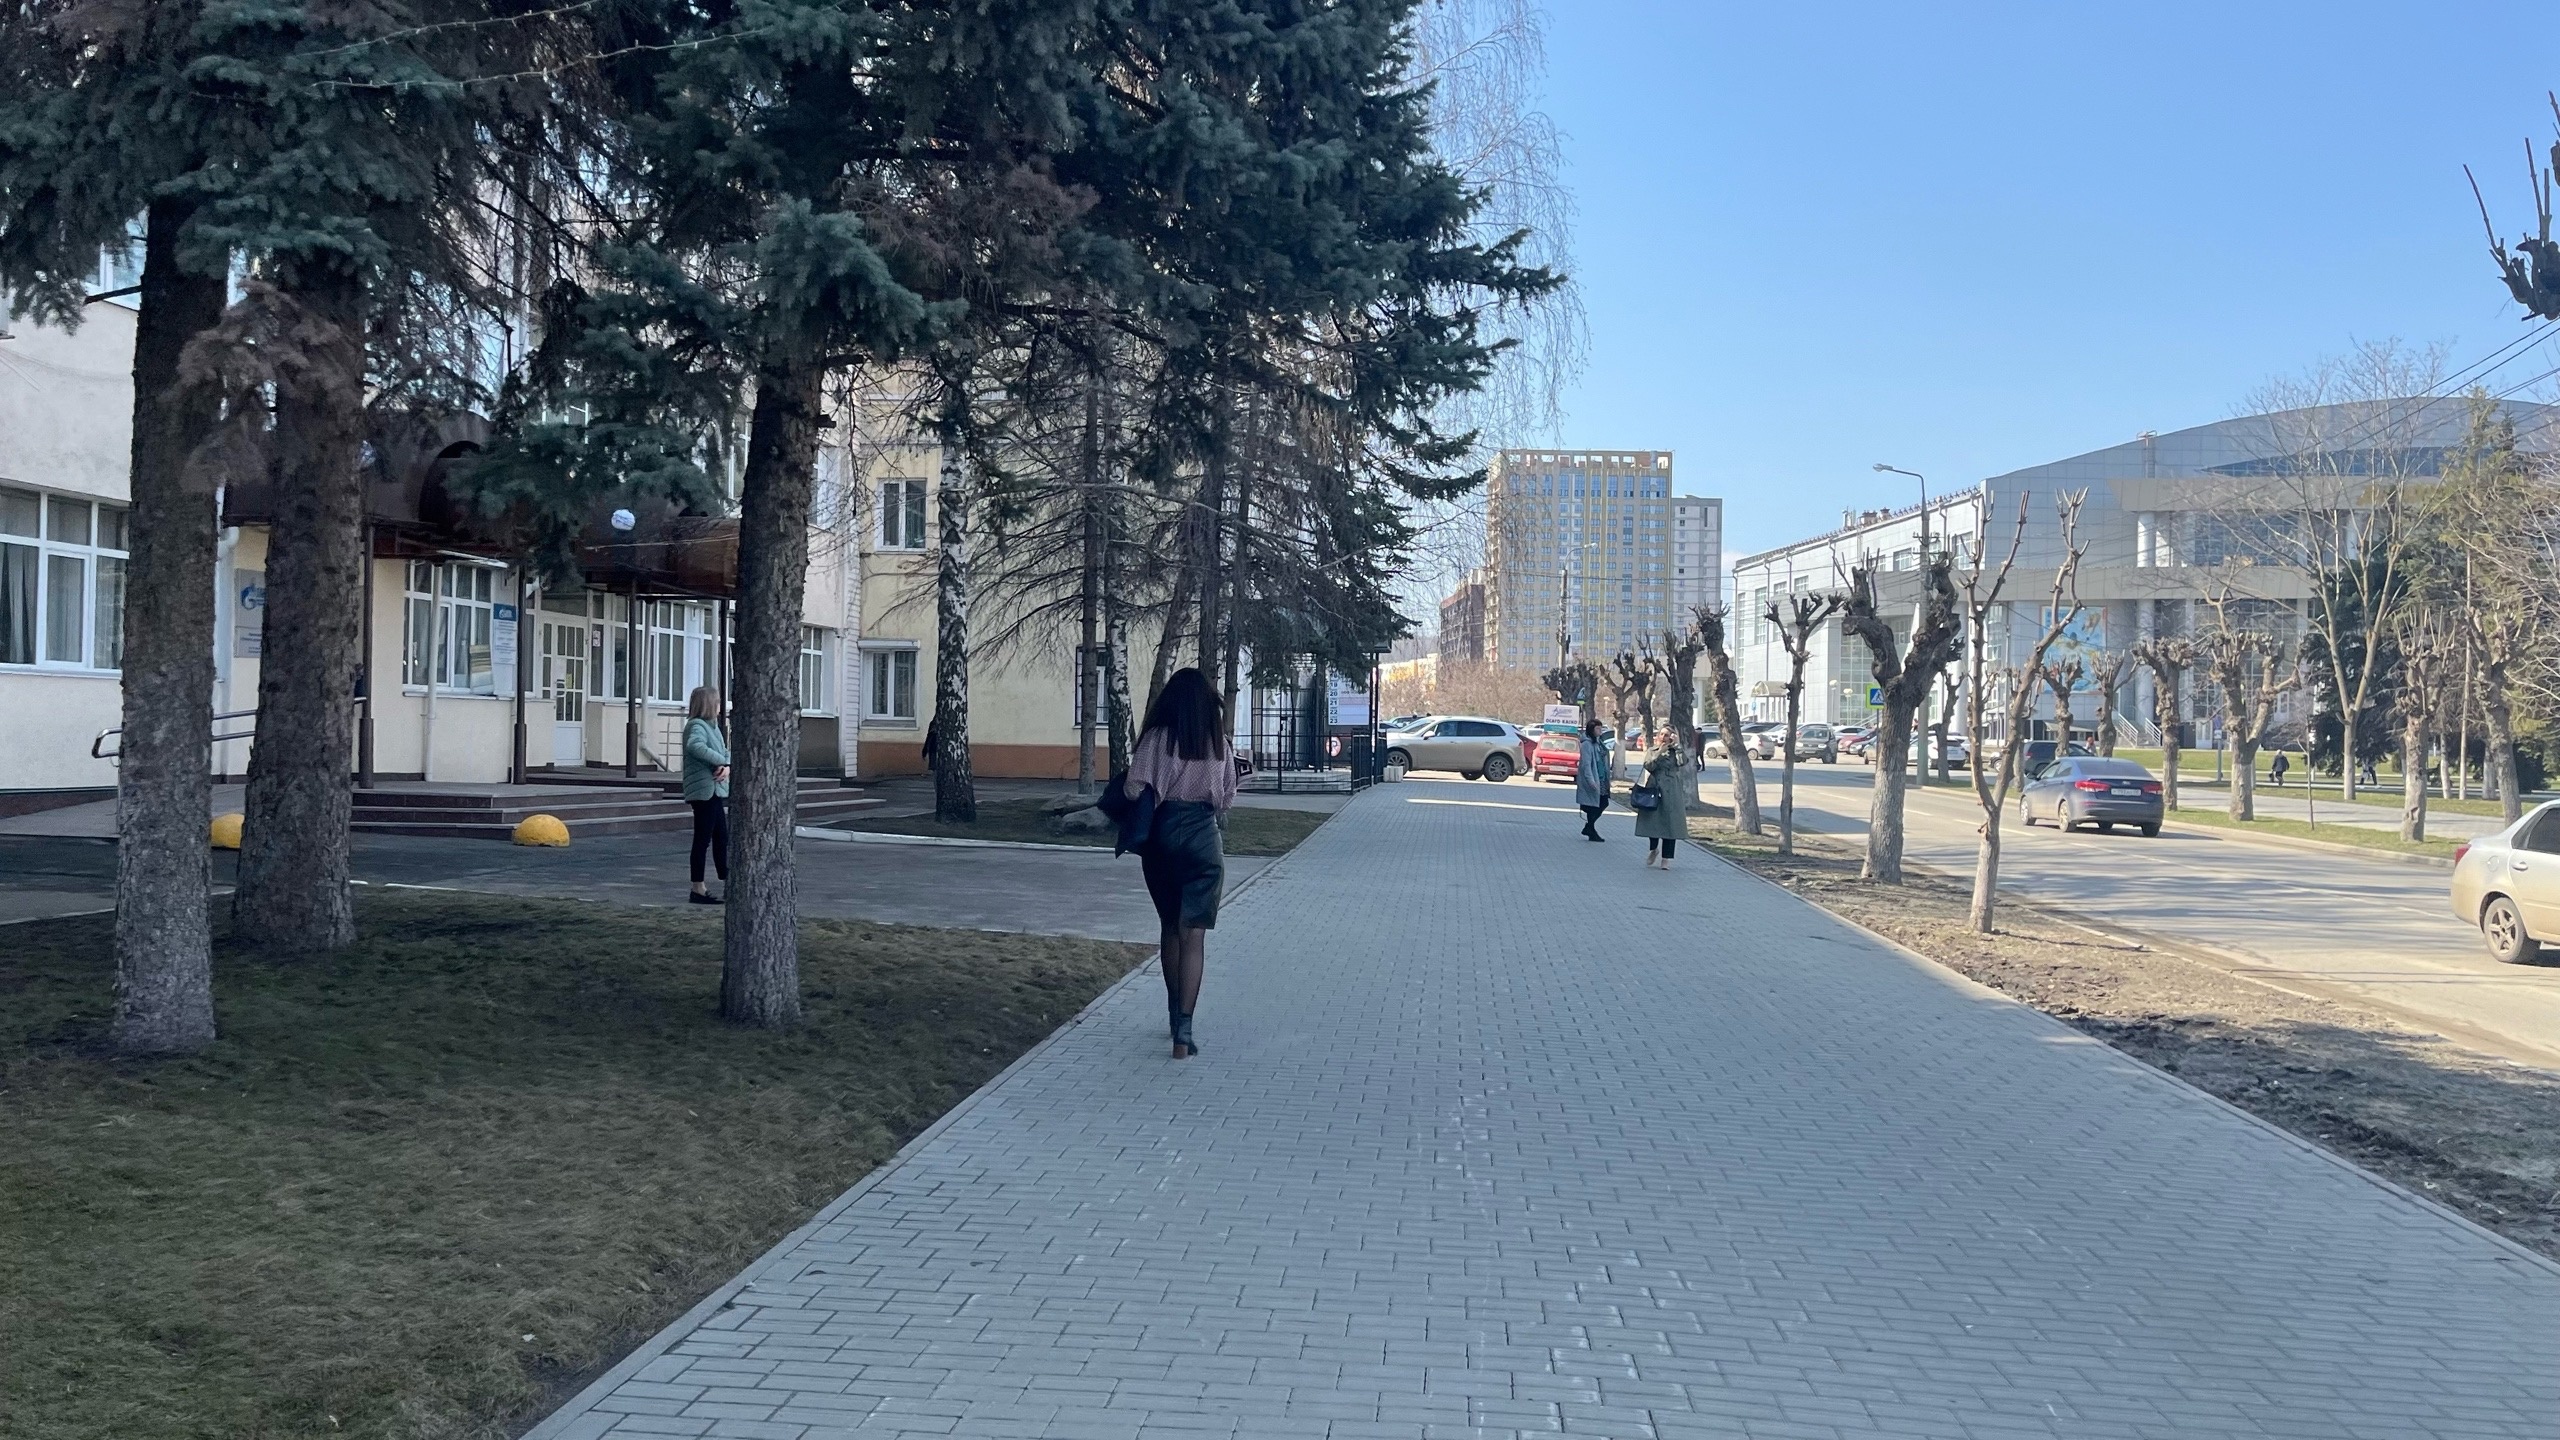 "В связи с ситуацией в стране": работающих россиян решено перевести на "шестидневку" с 22 апреля